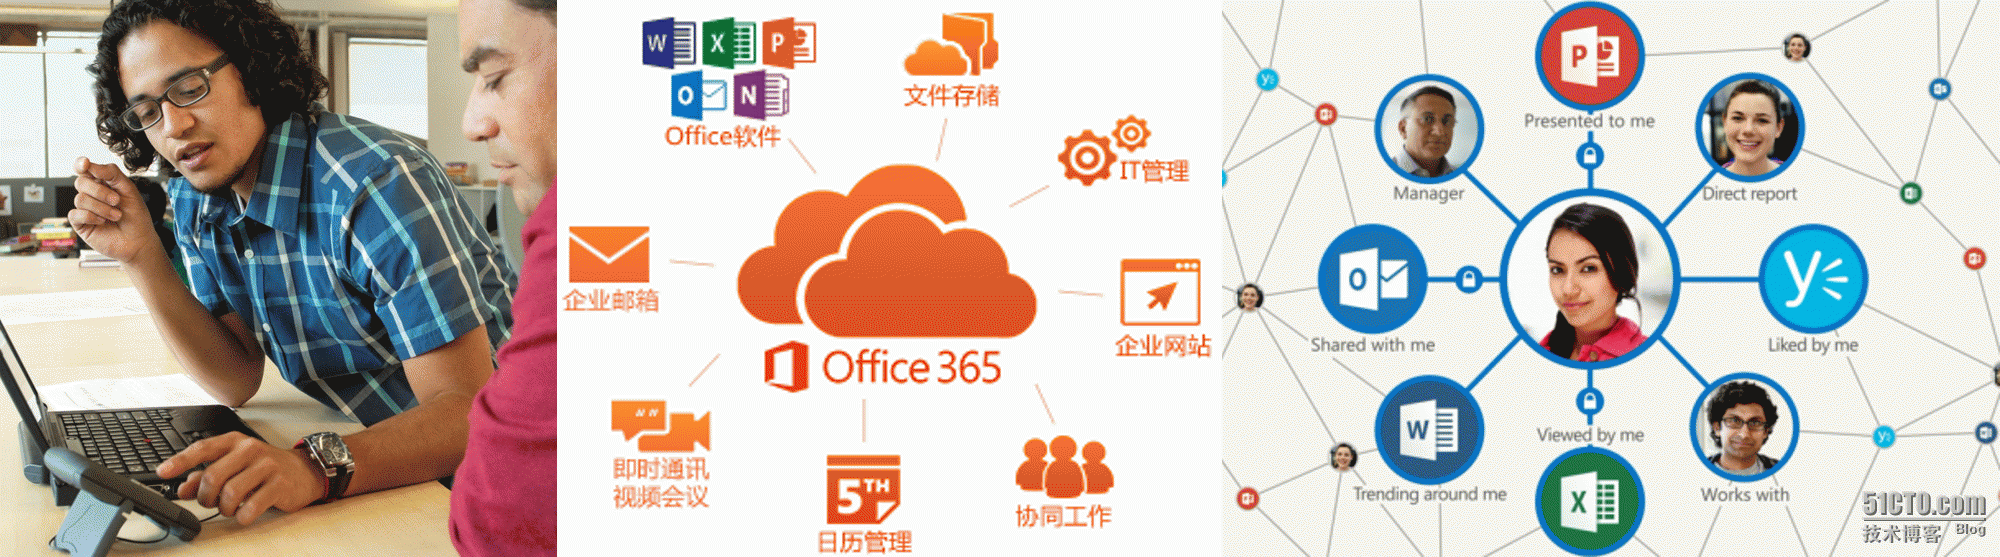 Office365——Office客户端_office365； office pr